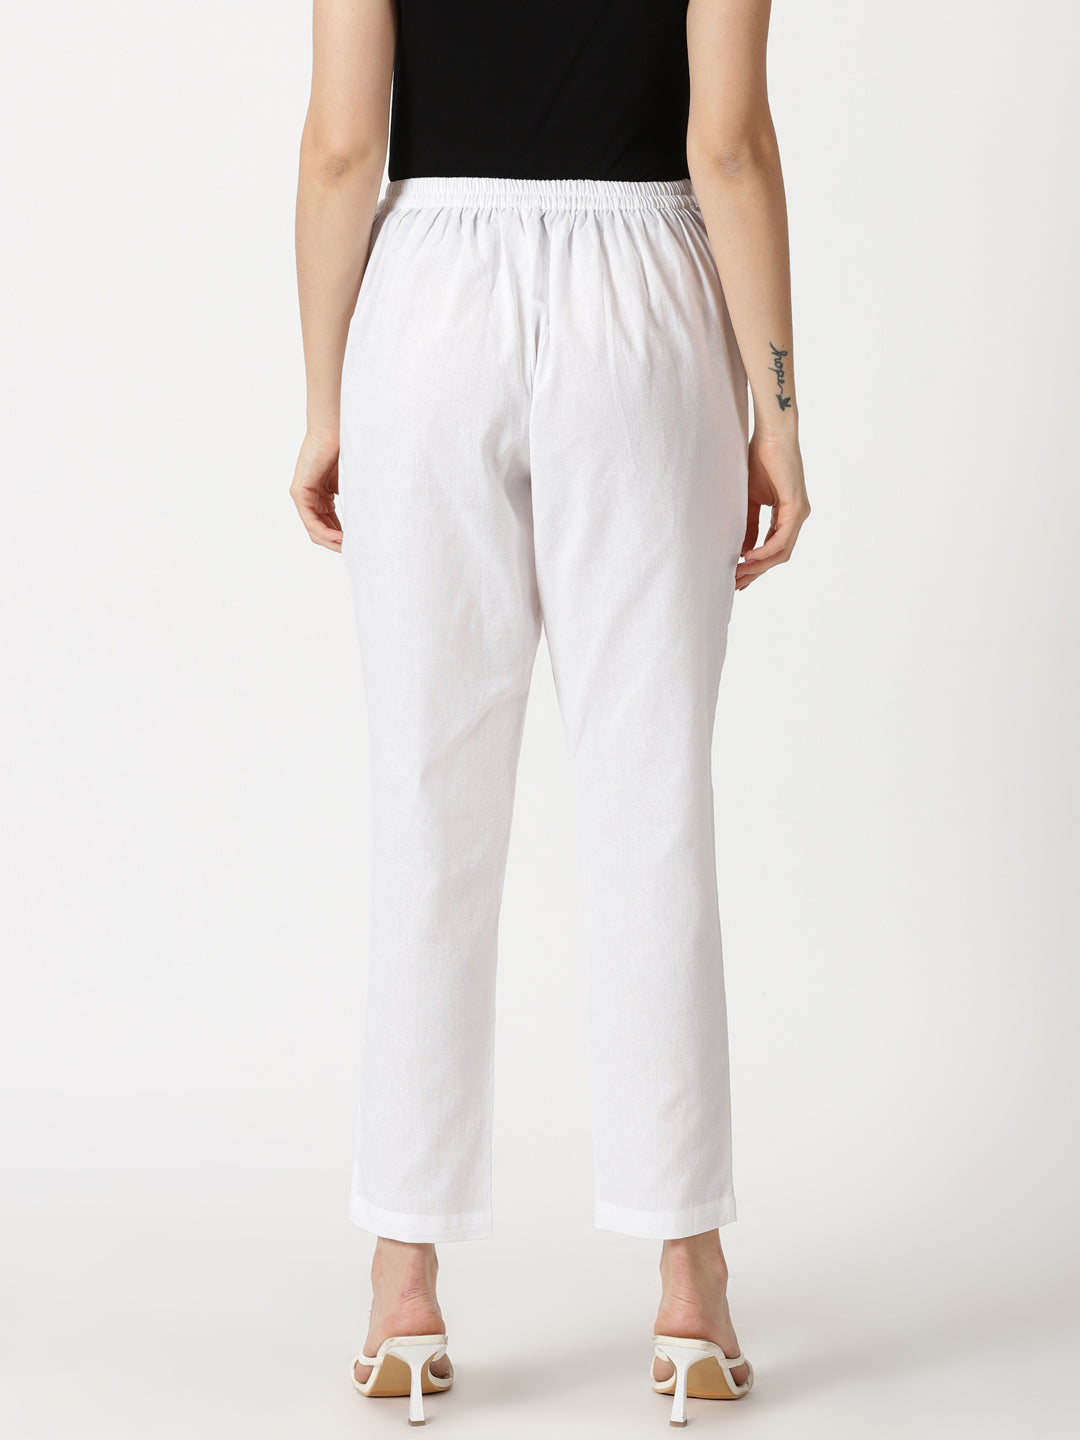 Merchant Marine Casual Trousers  Buy Merchant Marine Mens Cotton Linen  Trousers Khaki Online  Nykaa Fashion